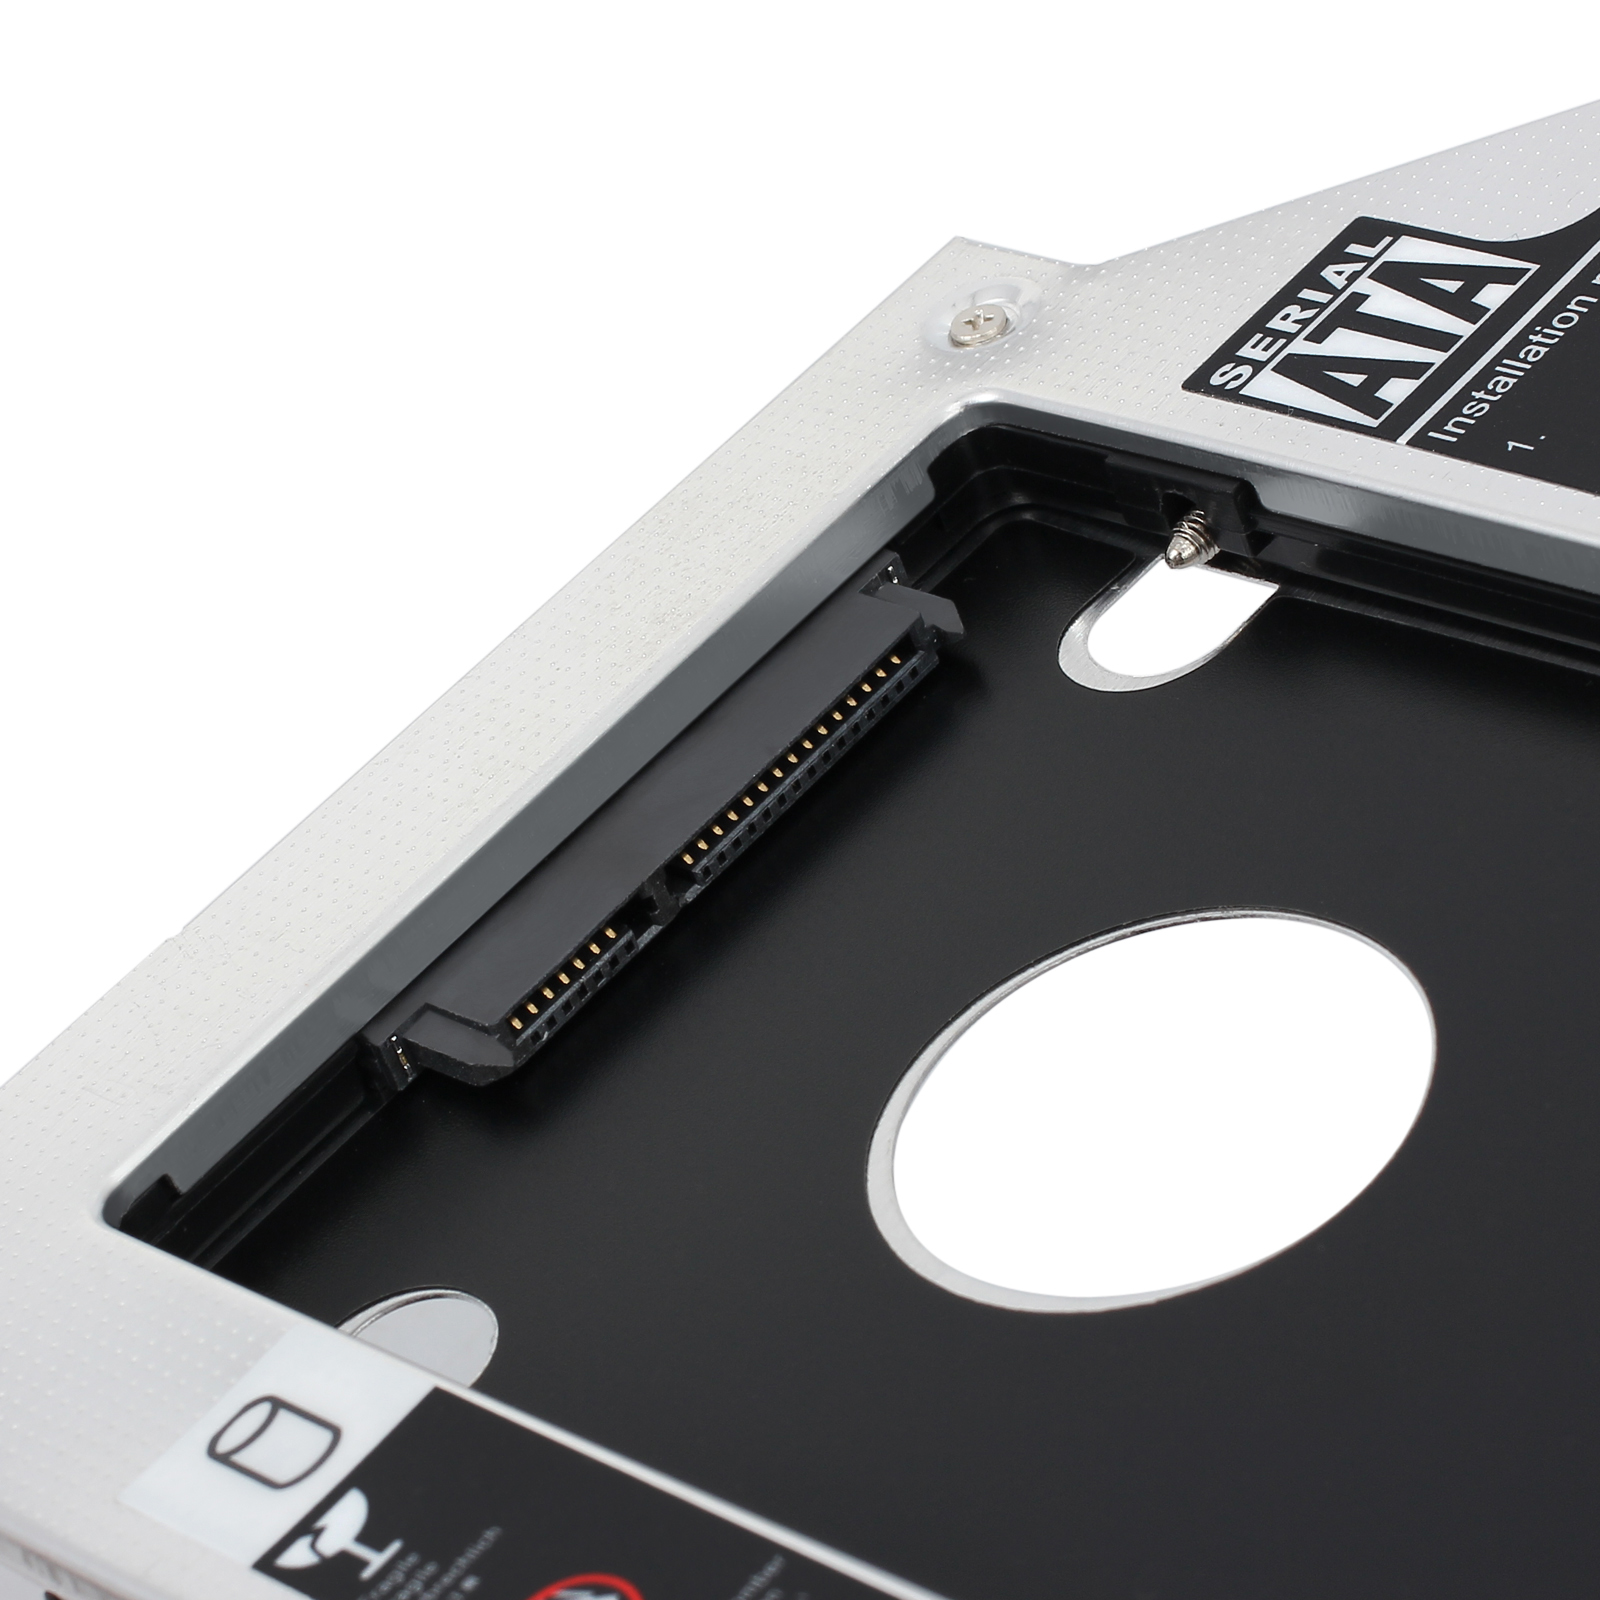 2tb ssd hard drive for macbook pro